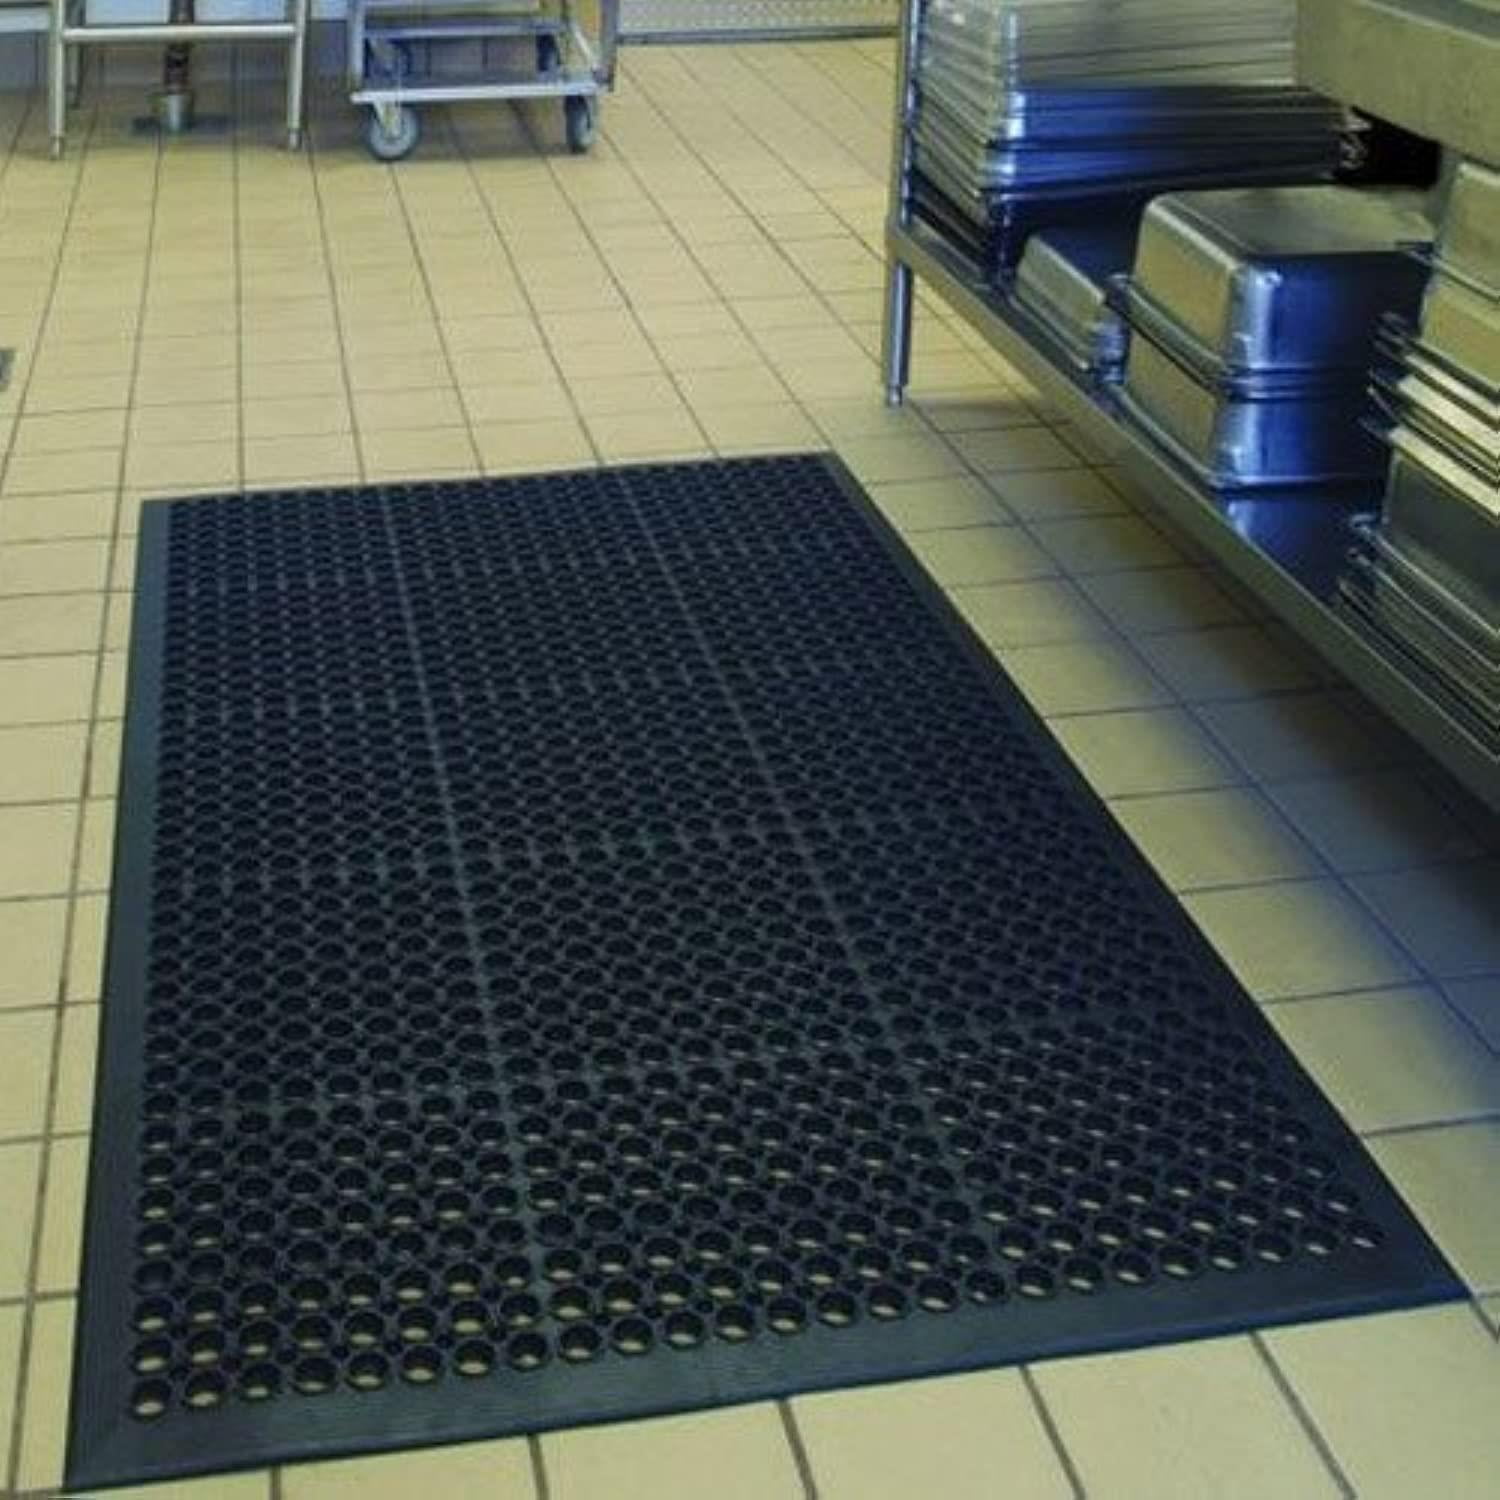 Ktaxon Rubber Floor Mat with Holes, 60 x 36 Anti-Fatigue Non-Slip Door Mat  Drainage Mat for Industrial Domestic Kitchen Restaurant Bar Bathroom  Garage, Indoor/Outdoor Cushion 